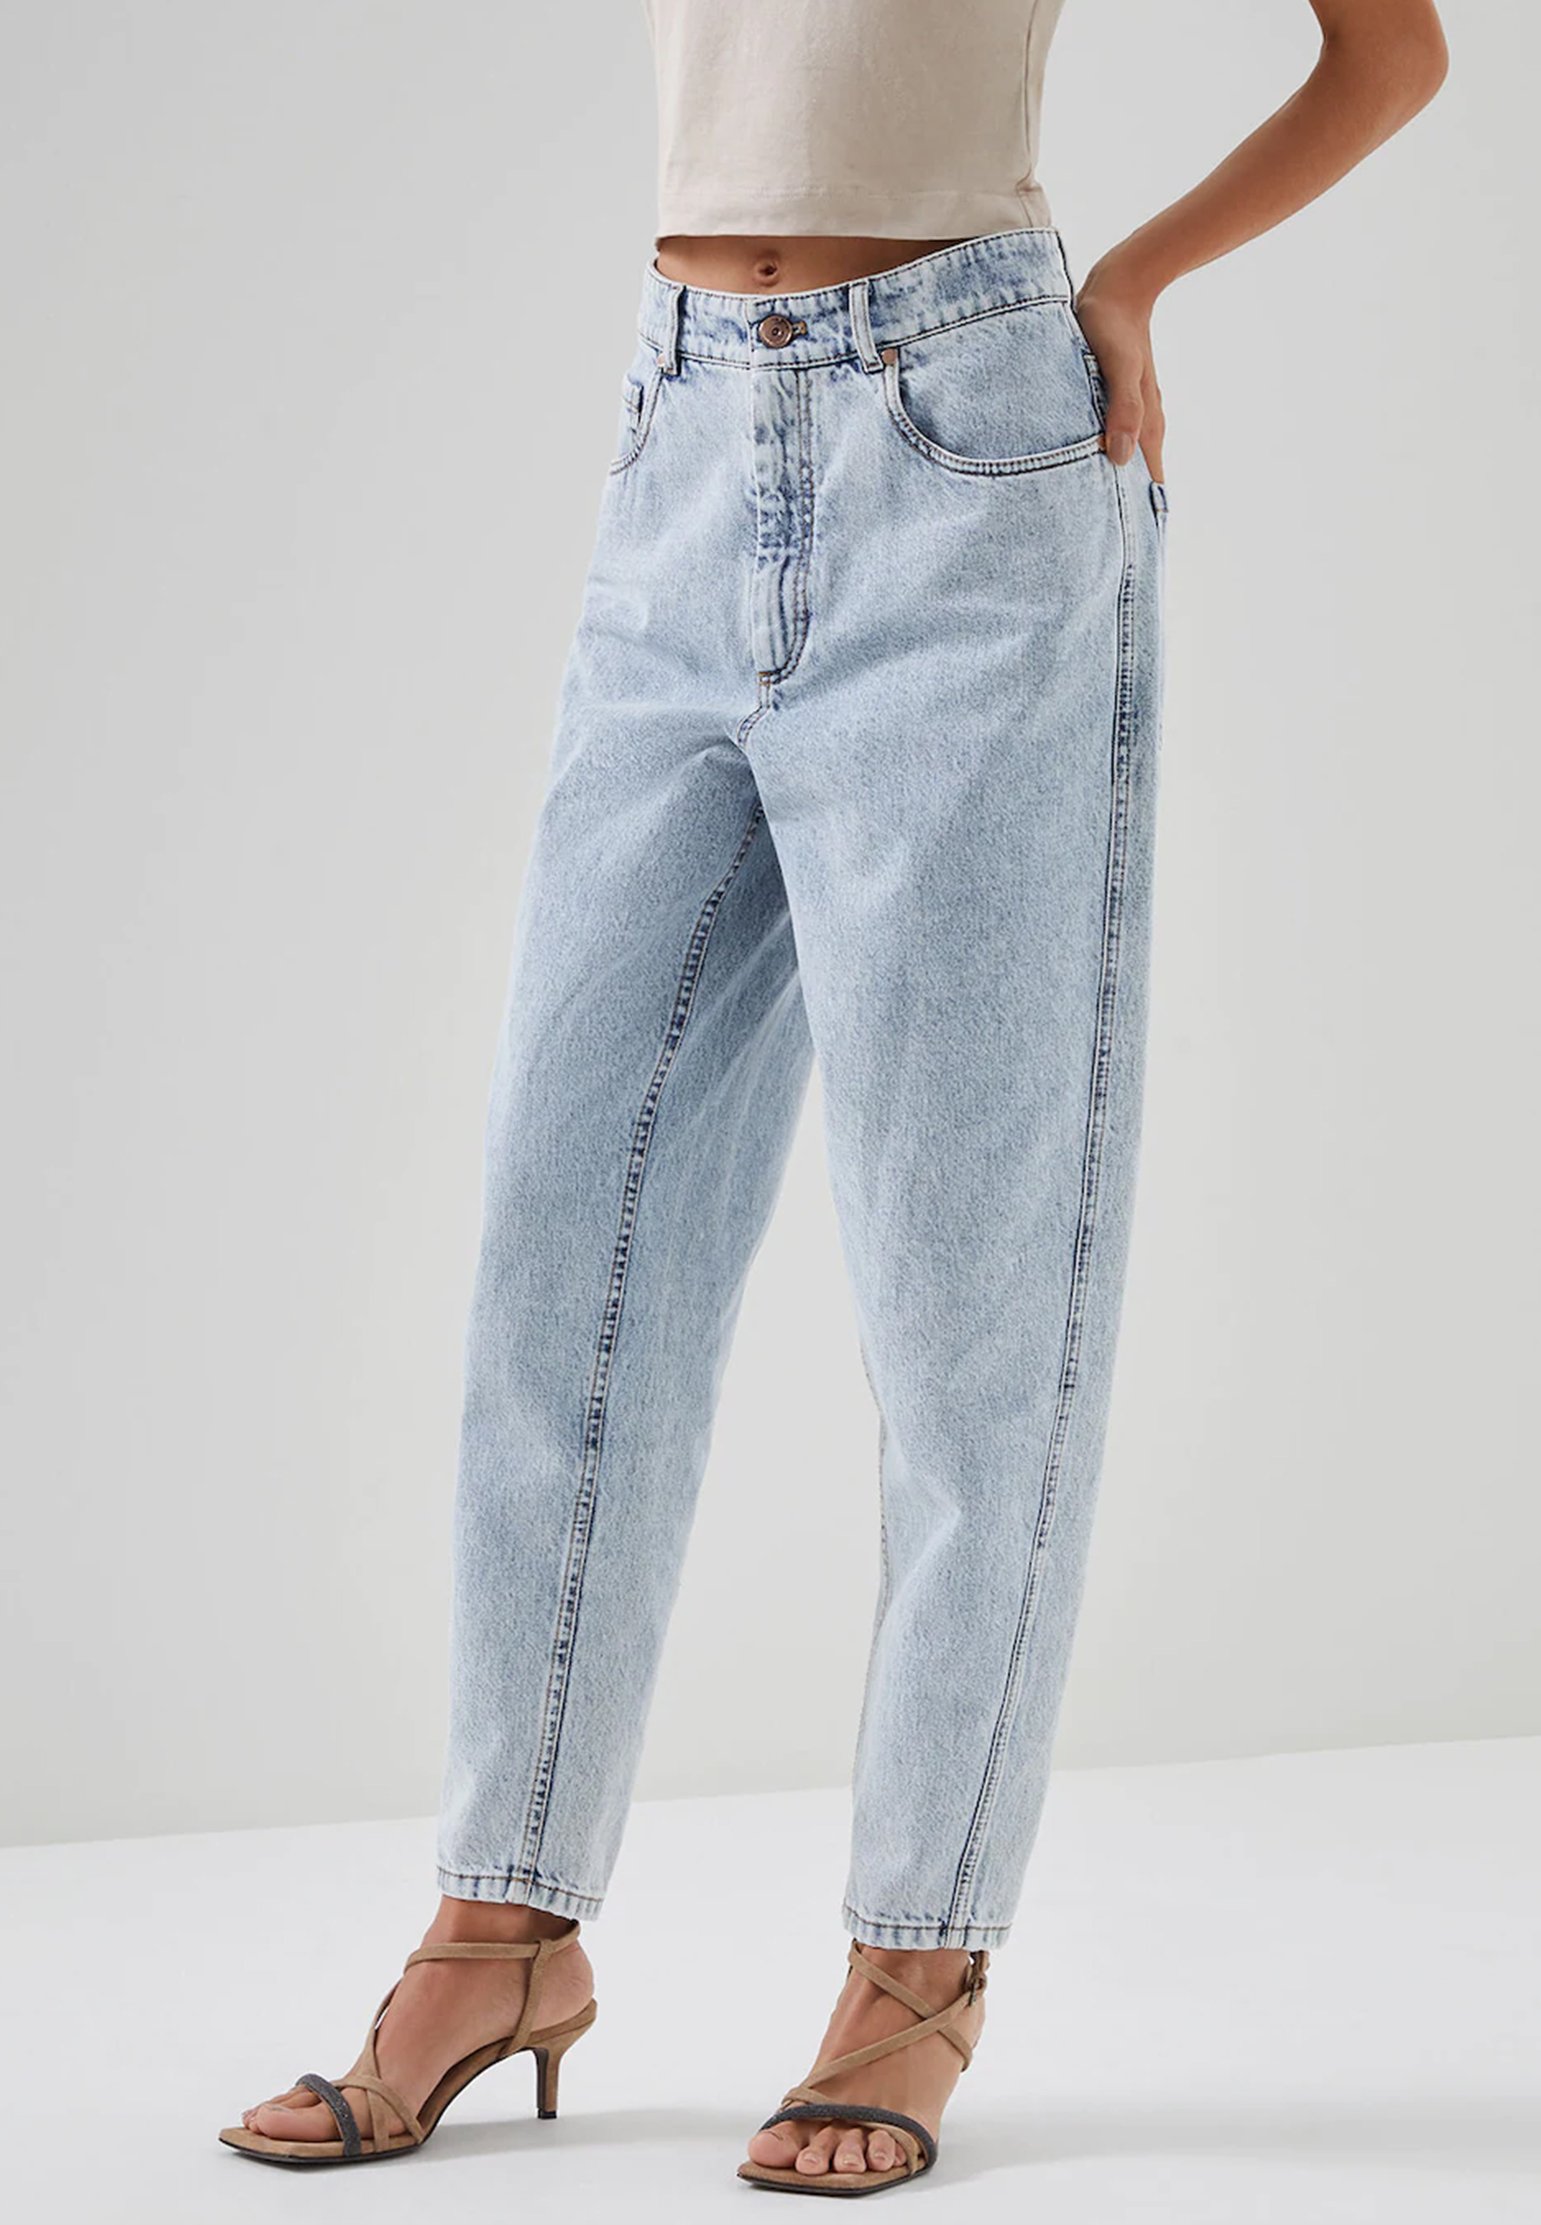 Jeans BRUNELLO CUCINELLI Color: blue (Code: 625) in online store Allure